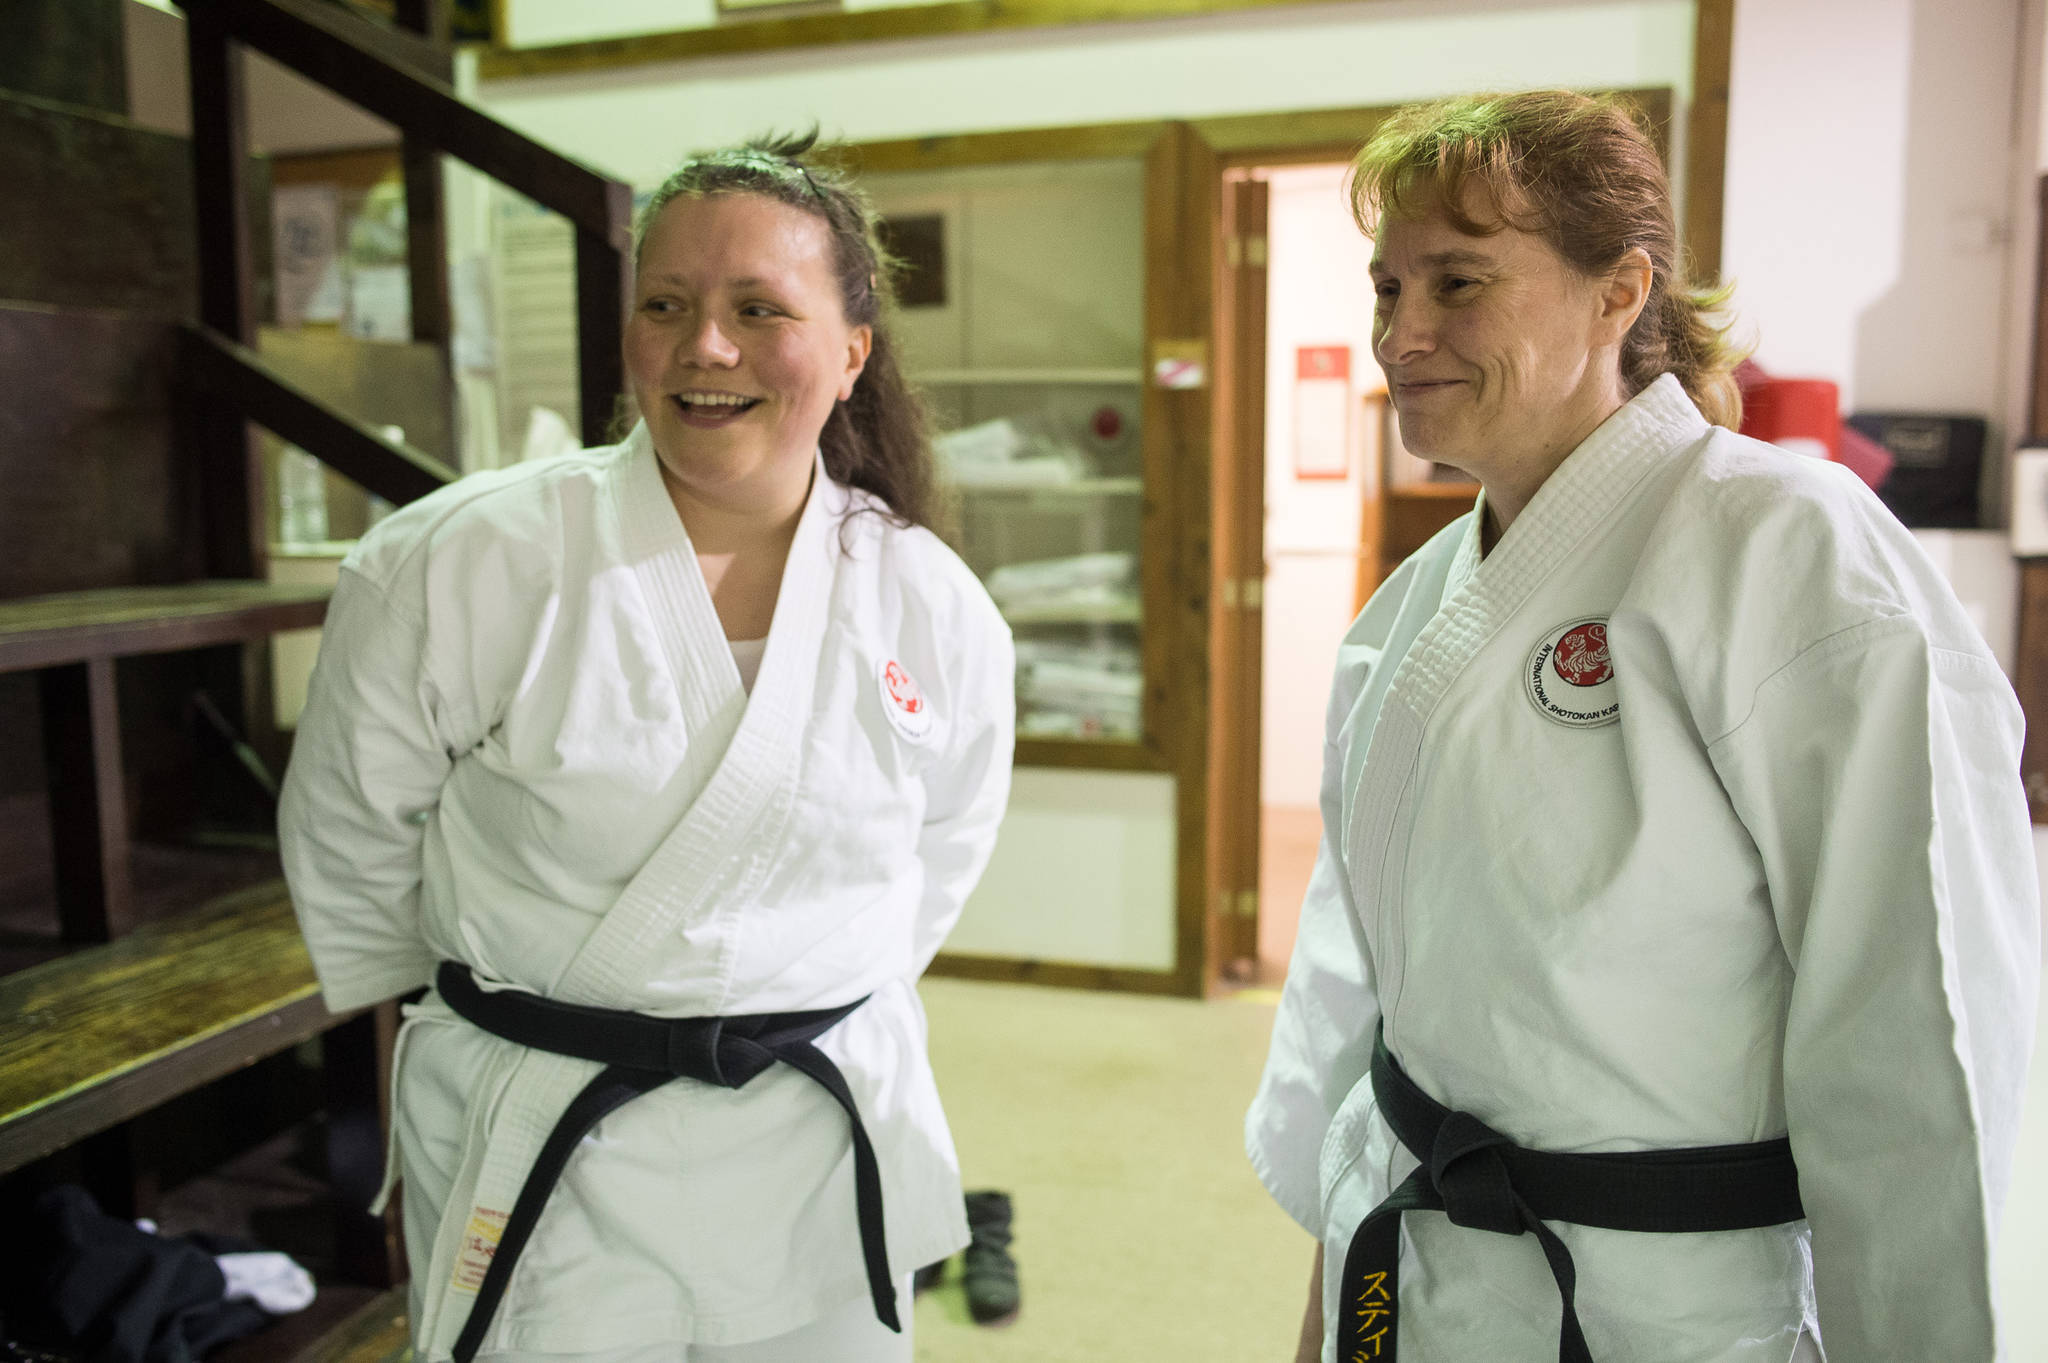 Maraiya Gentili, left, and Stacey Poulson at Juneau Shotokan Karate on Thursday, Oct. 5, 2017. Gentili was recently awarded her second degree black belt. Poulson was recently awarded her third degree black belt. (Michael Penn | Juneau Empire)